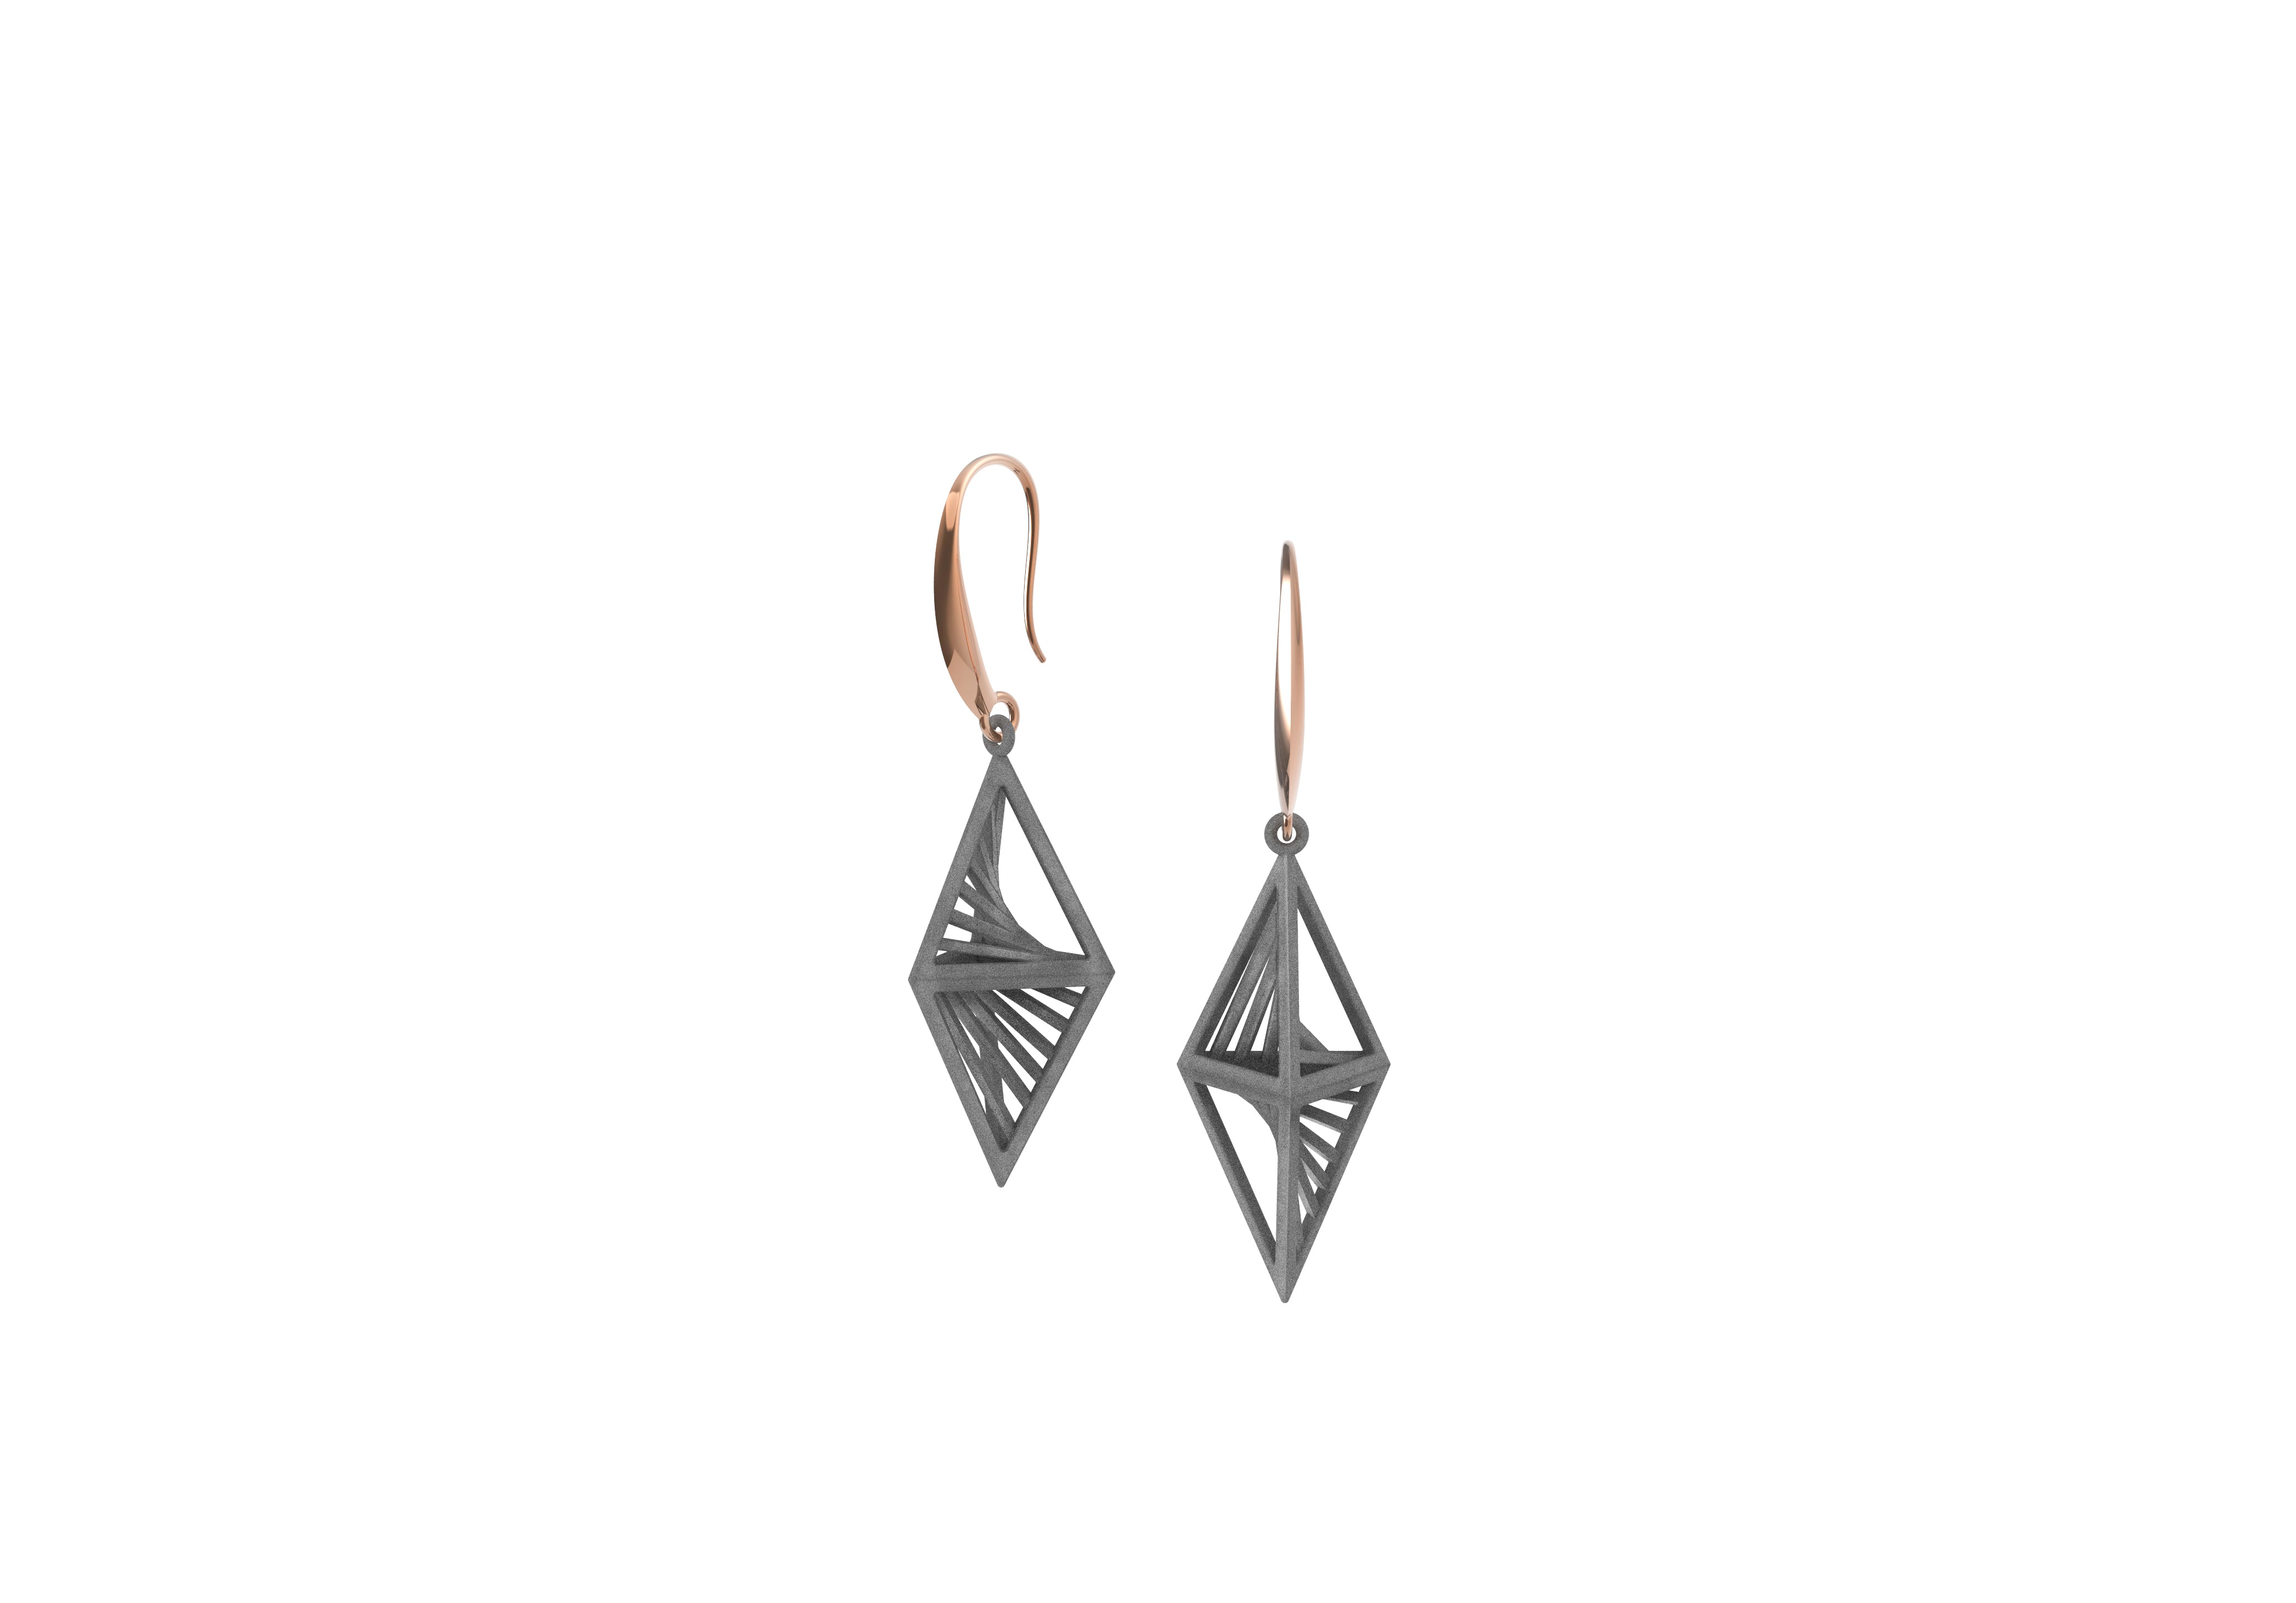 String Art Series - Diamond Coned Drop Earrings - Avant Gardist